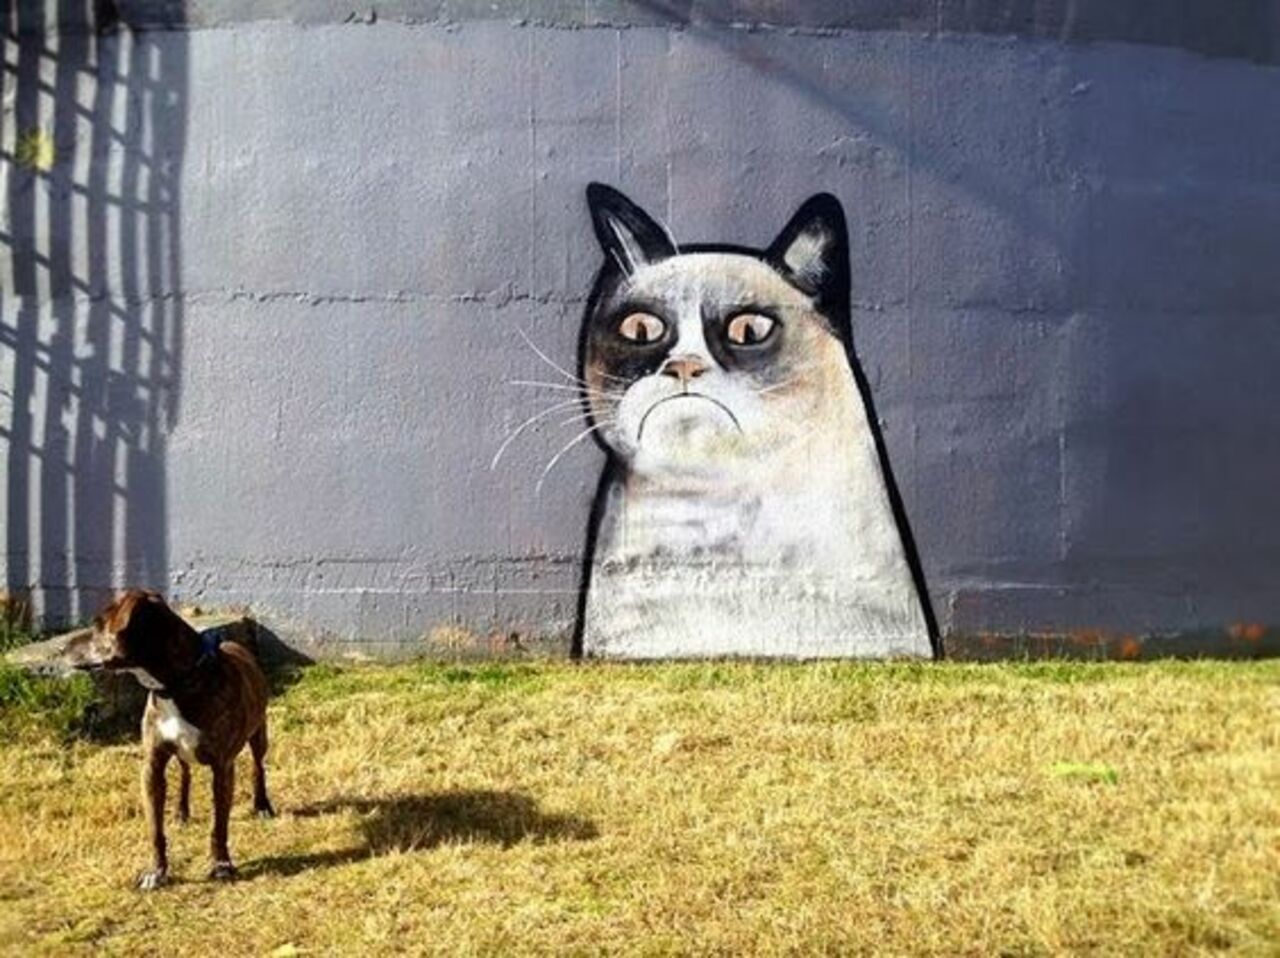 'Grumpy Cat' #Streetart in Auckland, New Zealand by Paul Walsh #Art https://t.co/wcAY44mqkC